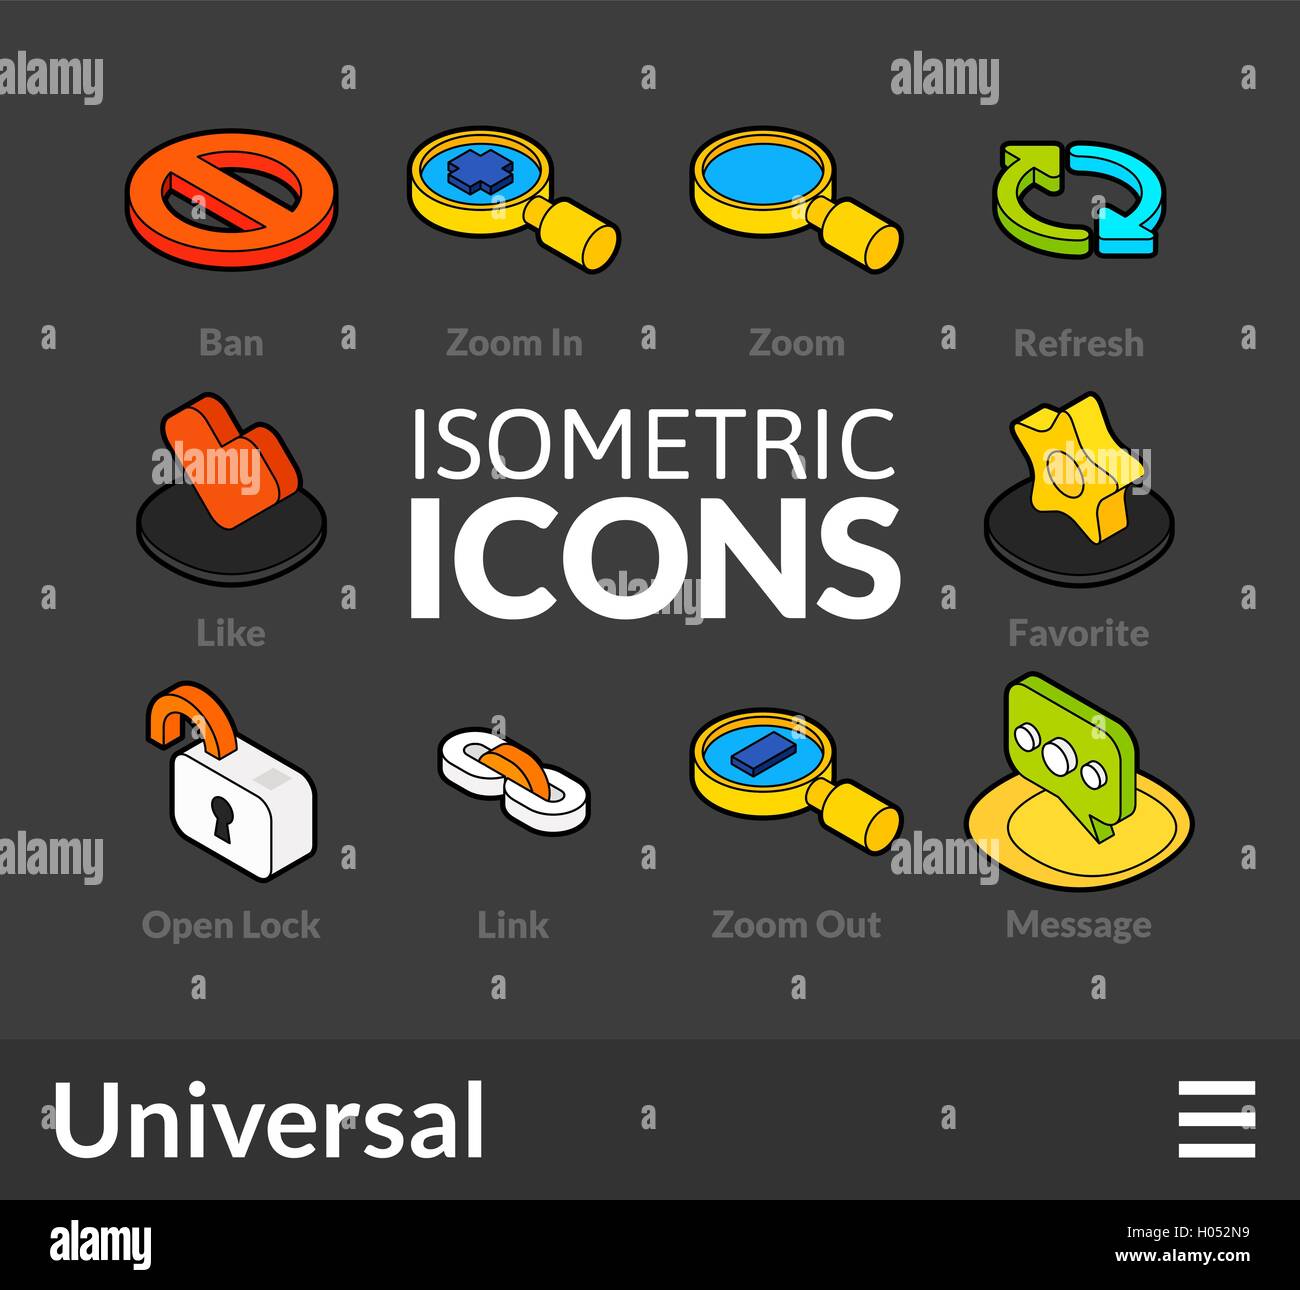 Isometrische Umriss Icons set 2 Stock Vektor